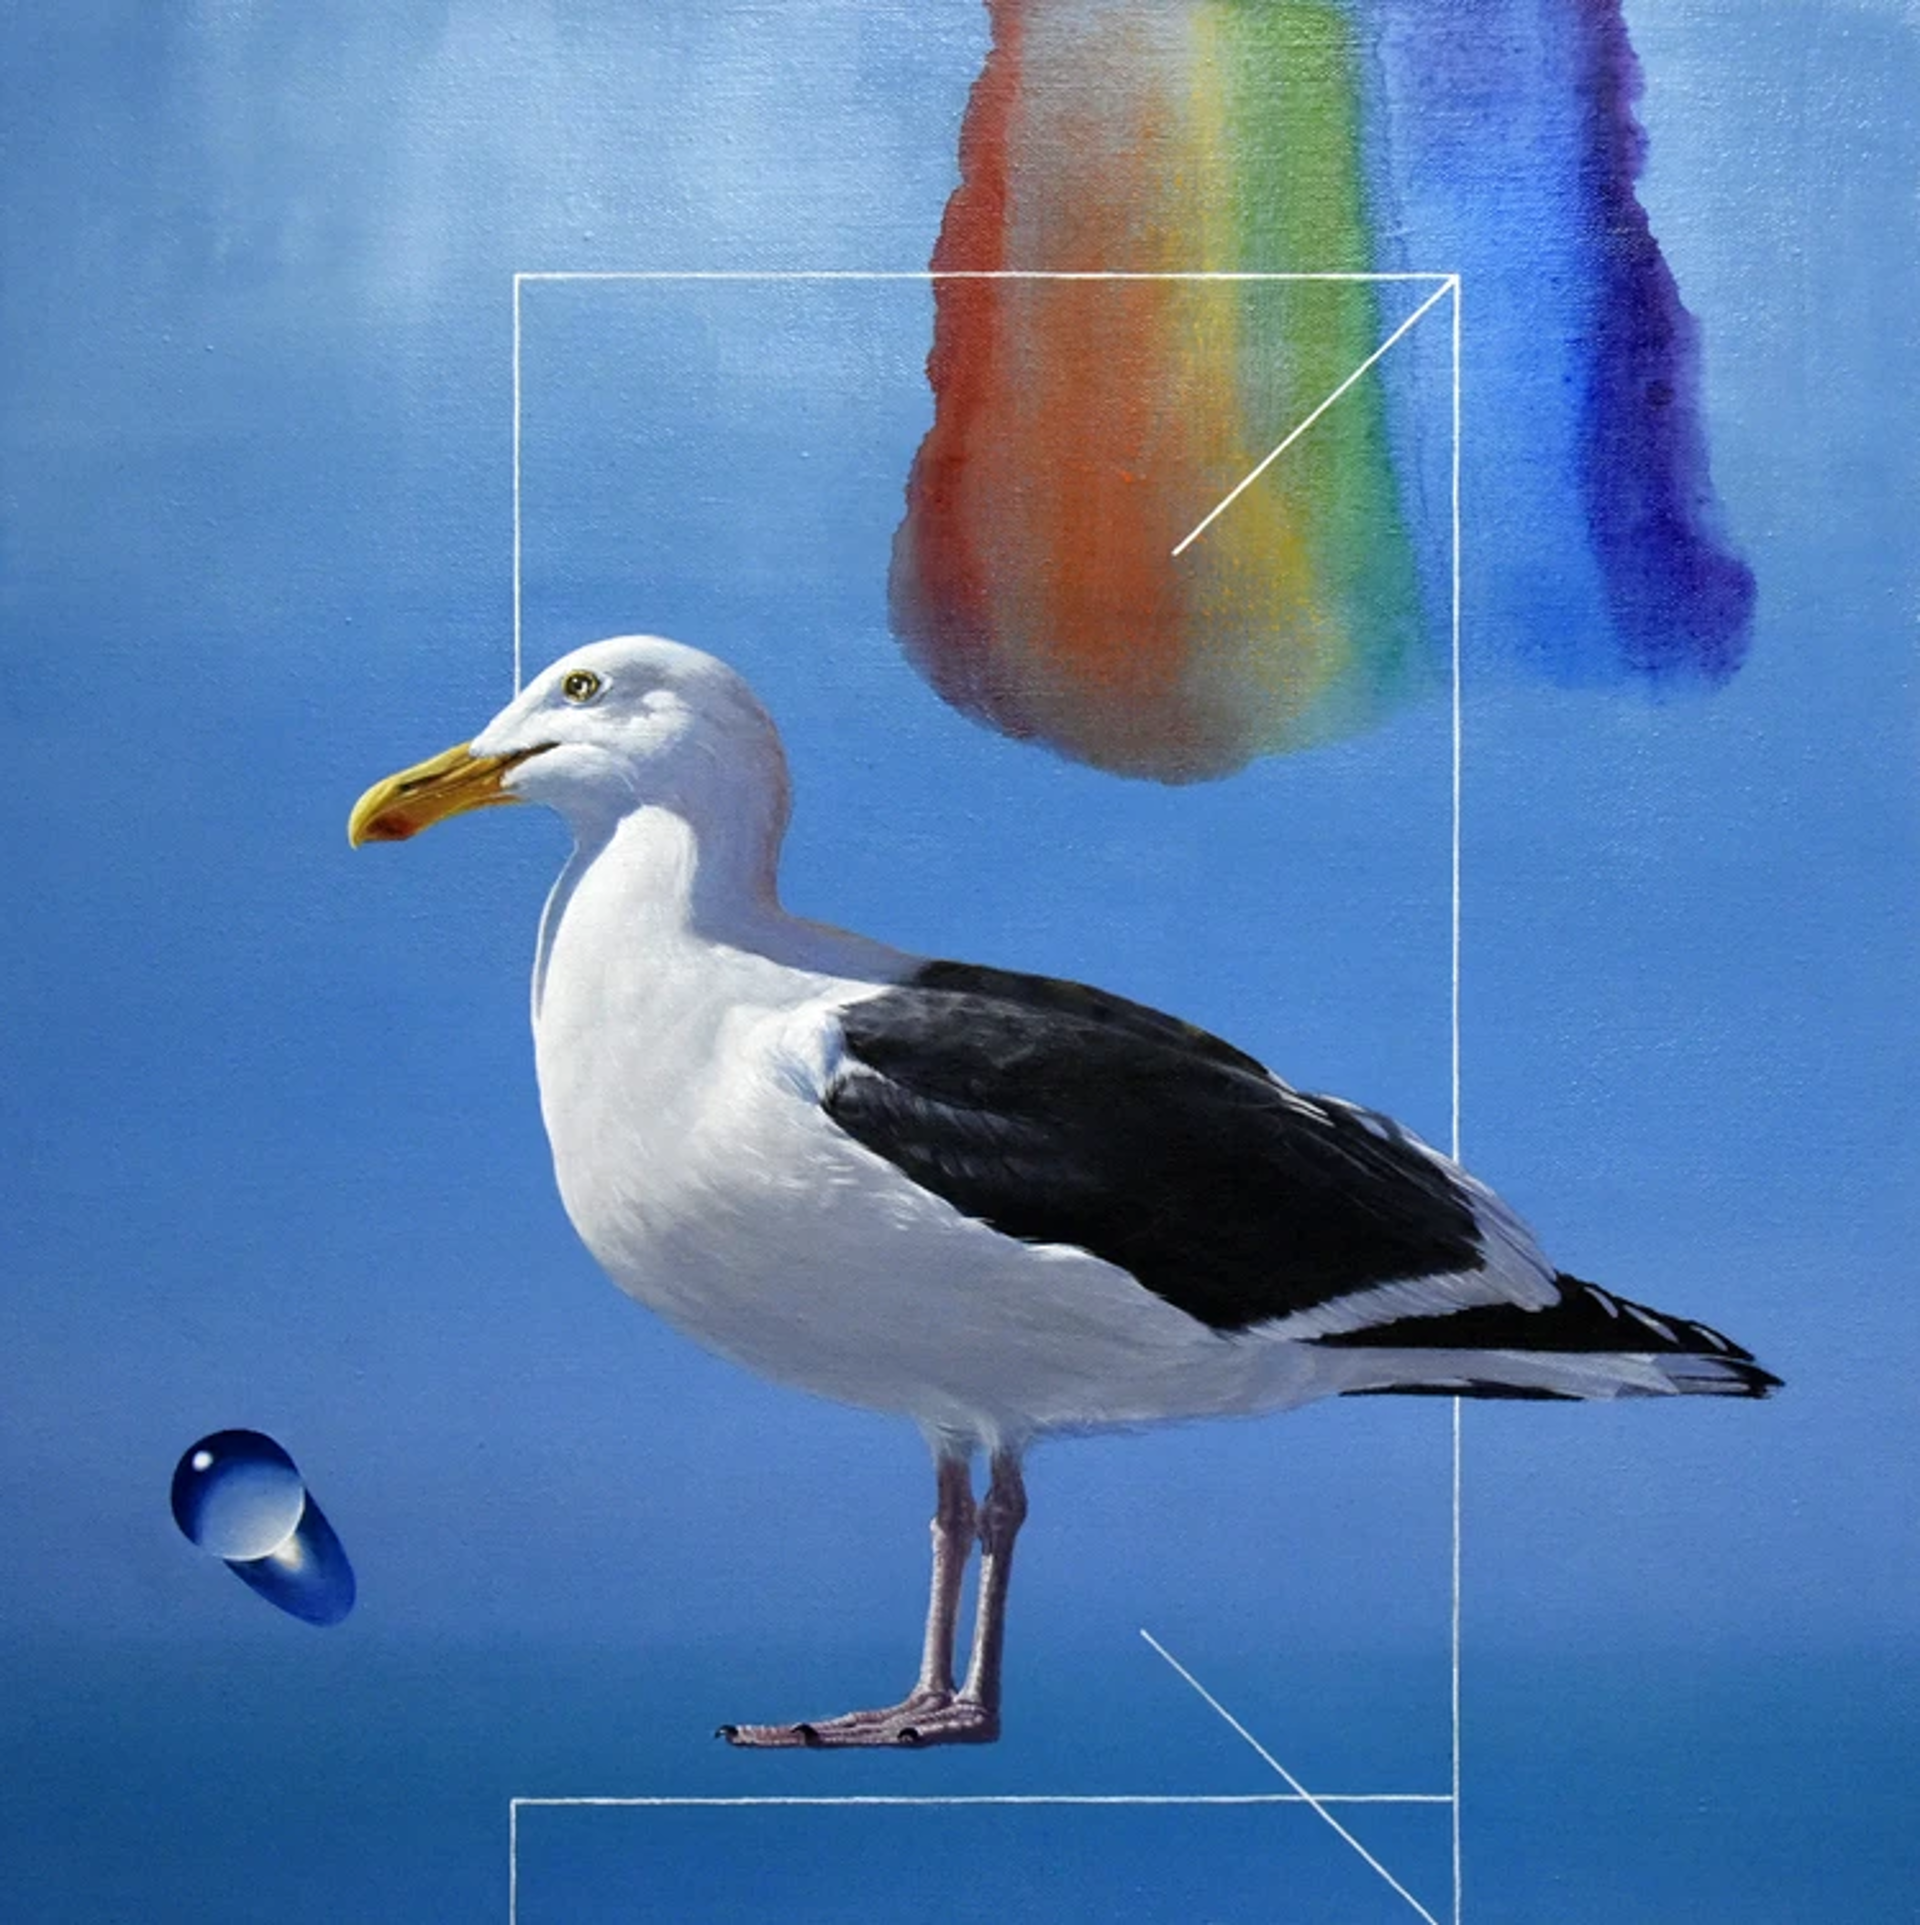 Light of Life - Seagull's Dream by Paul Art Lee